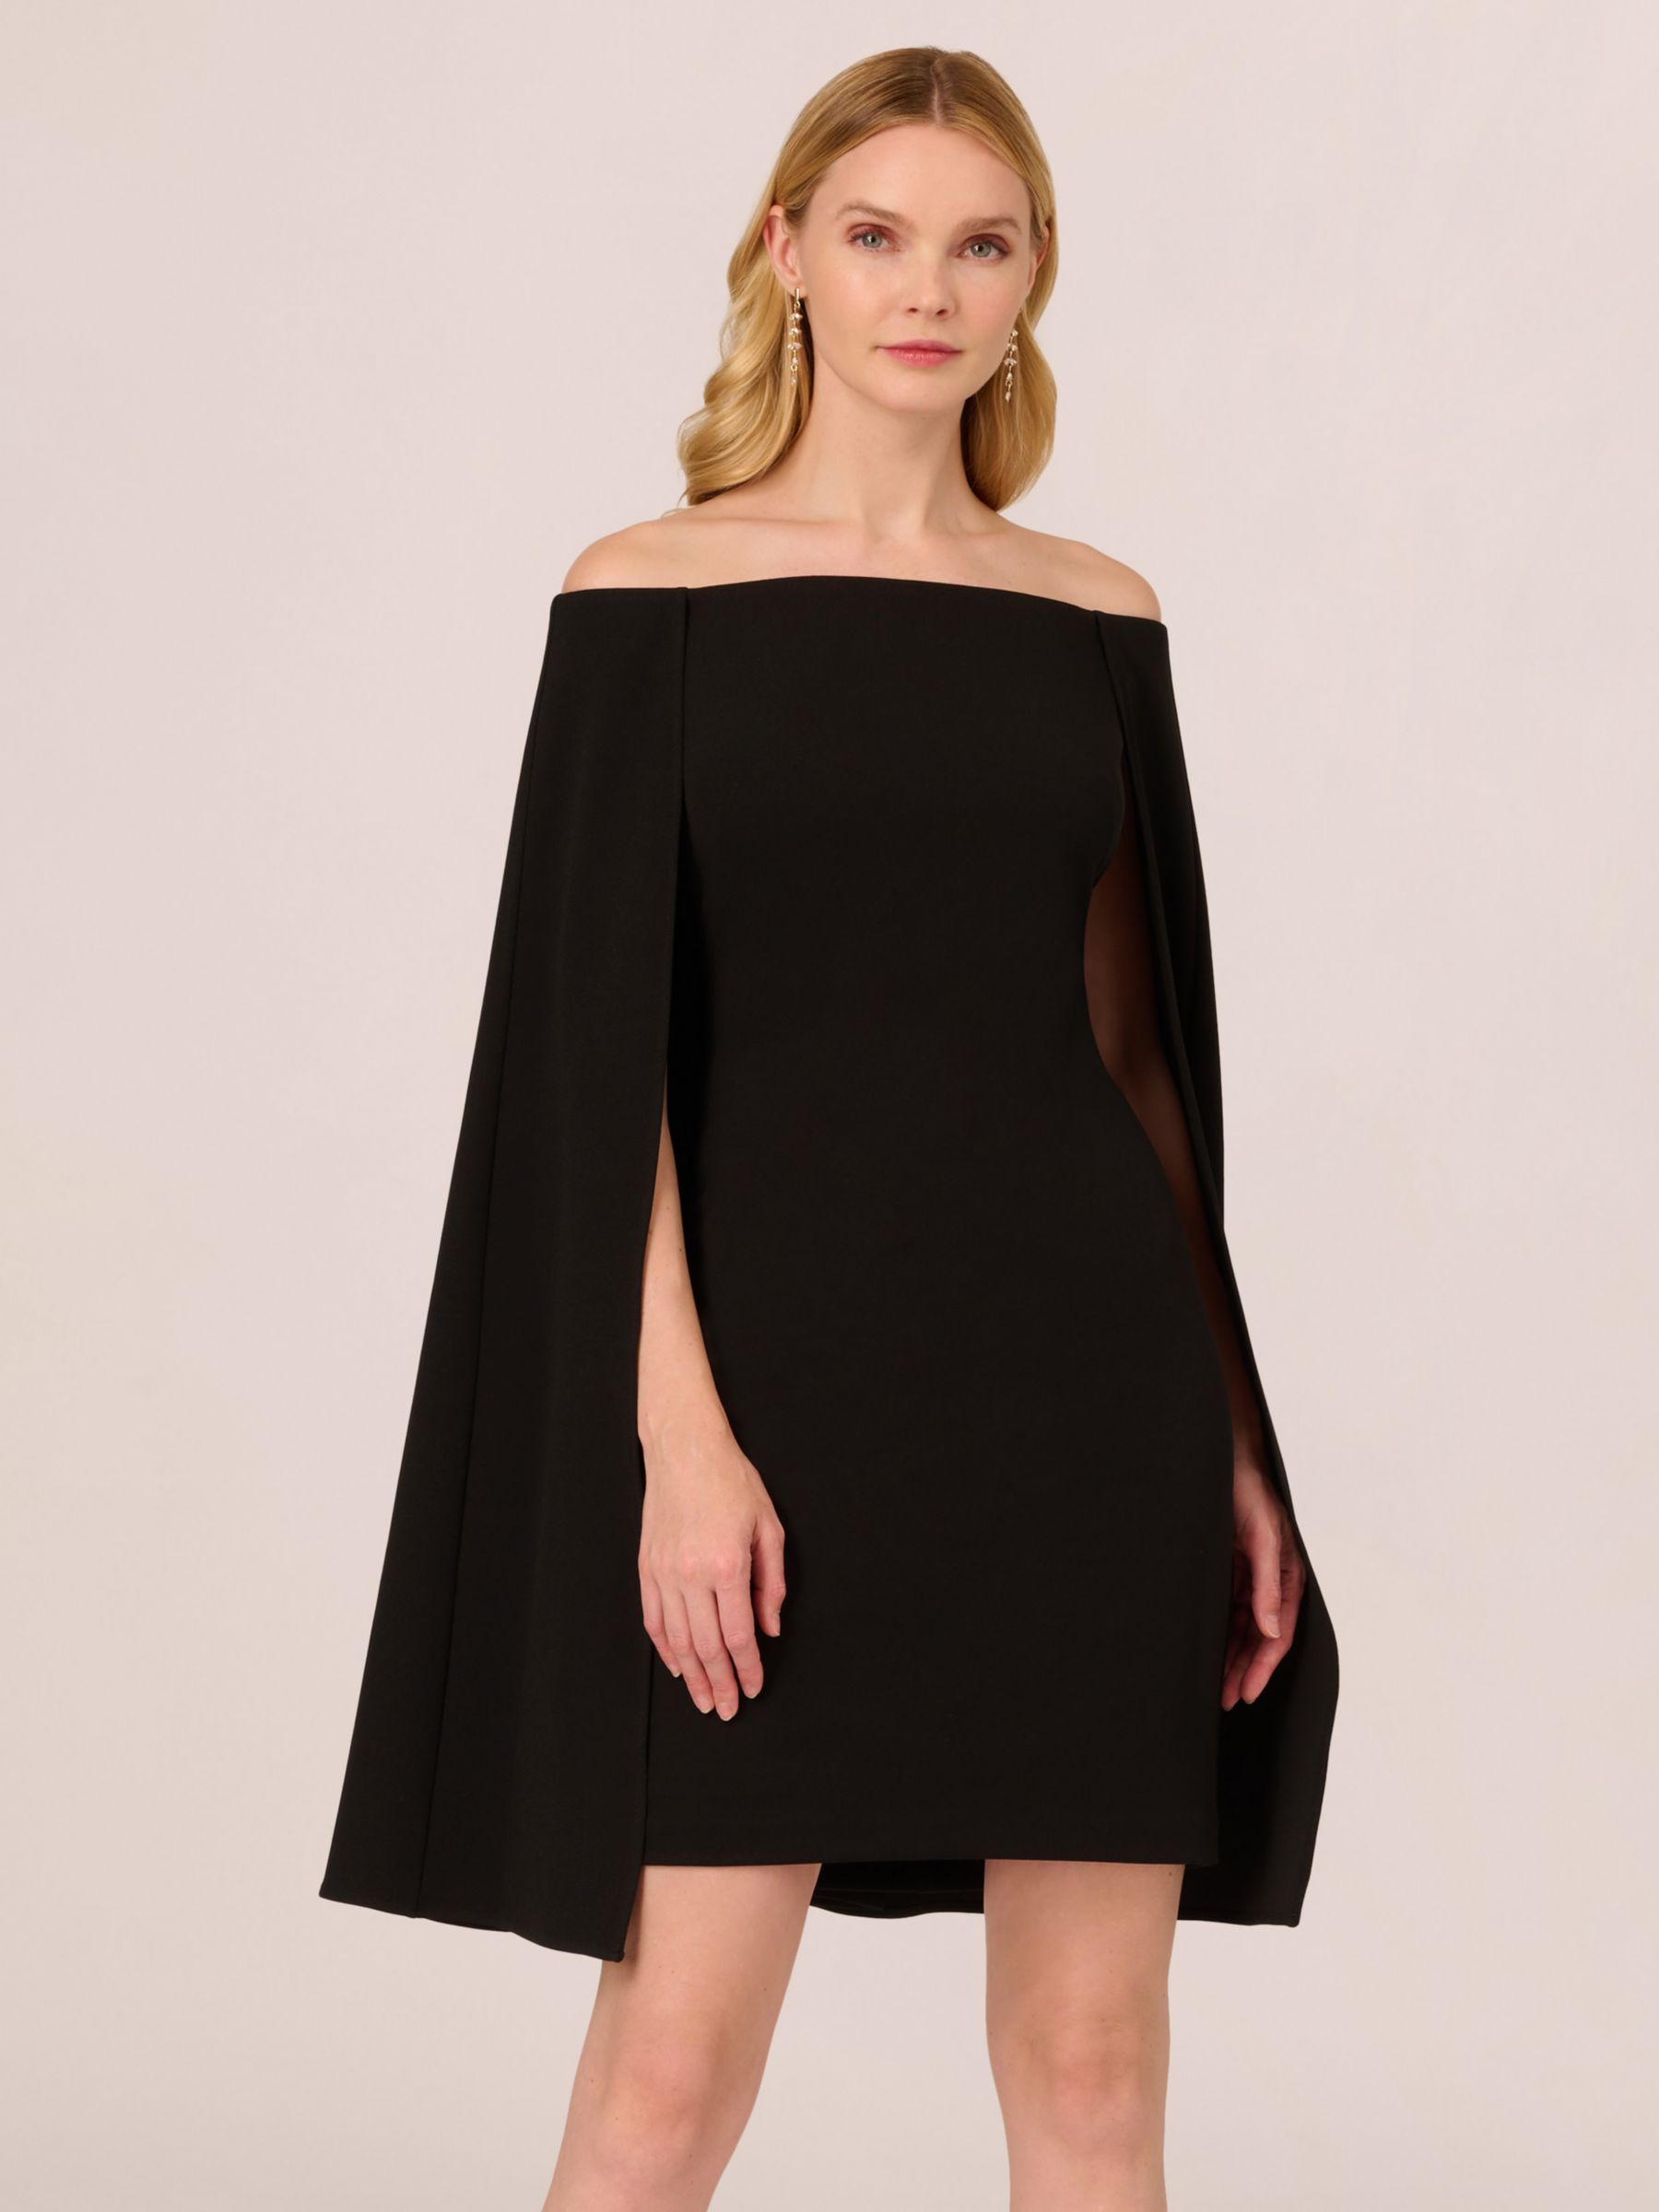 Adrianna Papell Off Shoulder Cape Mini Dress, Black, 6